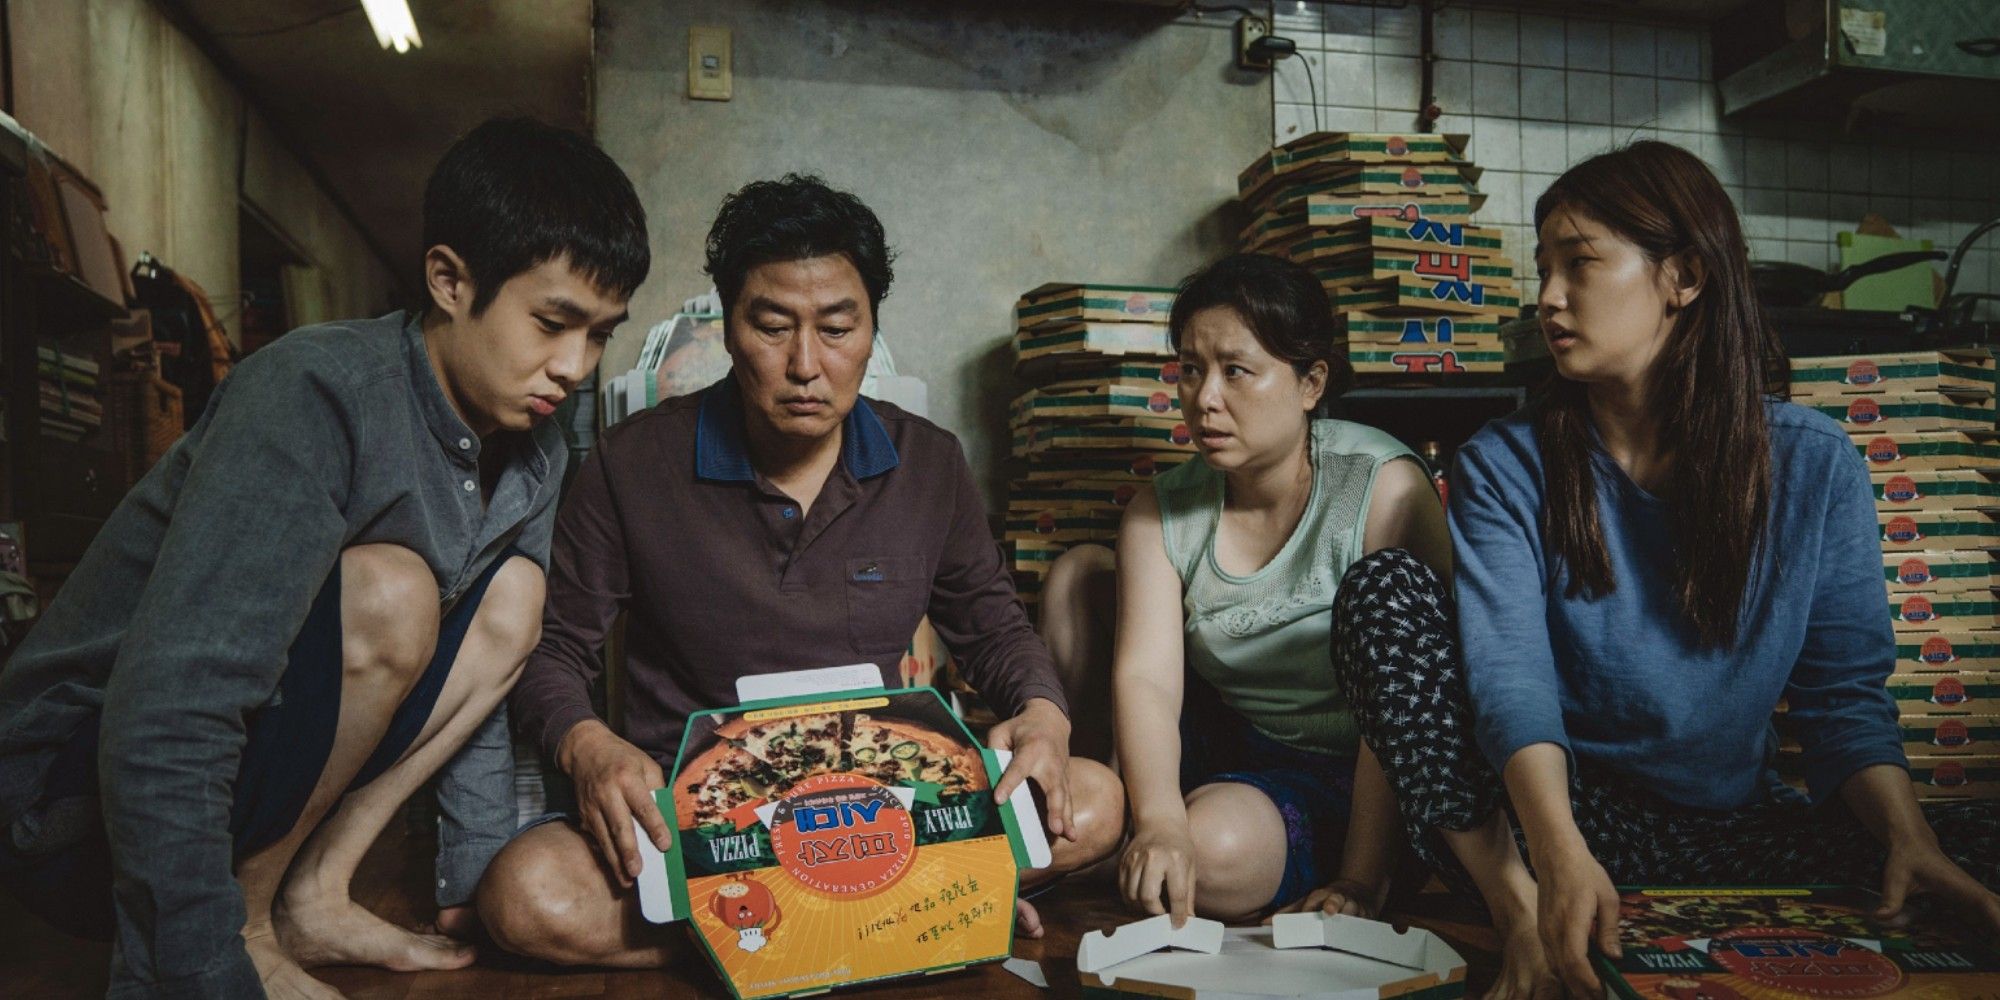 Choi Woo-shik, Song Kang-ho, Jang Hye-jin and Park So-dam as the Kim family folding pizza boxes in 'Parasite' in 'Parasite'